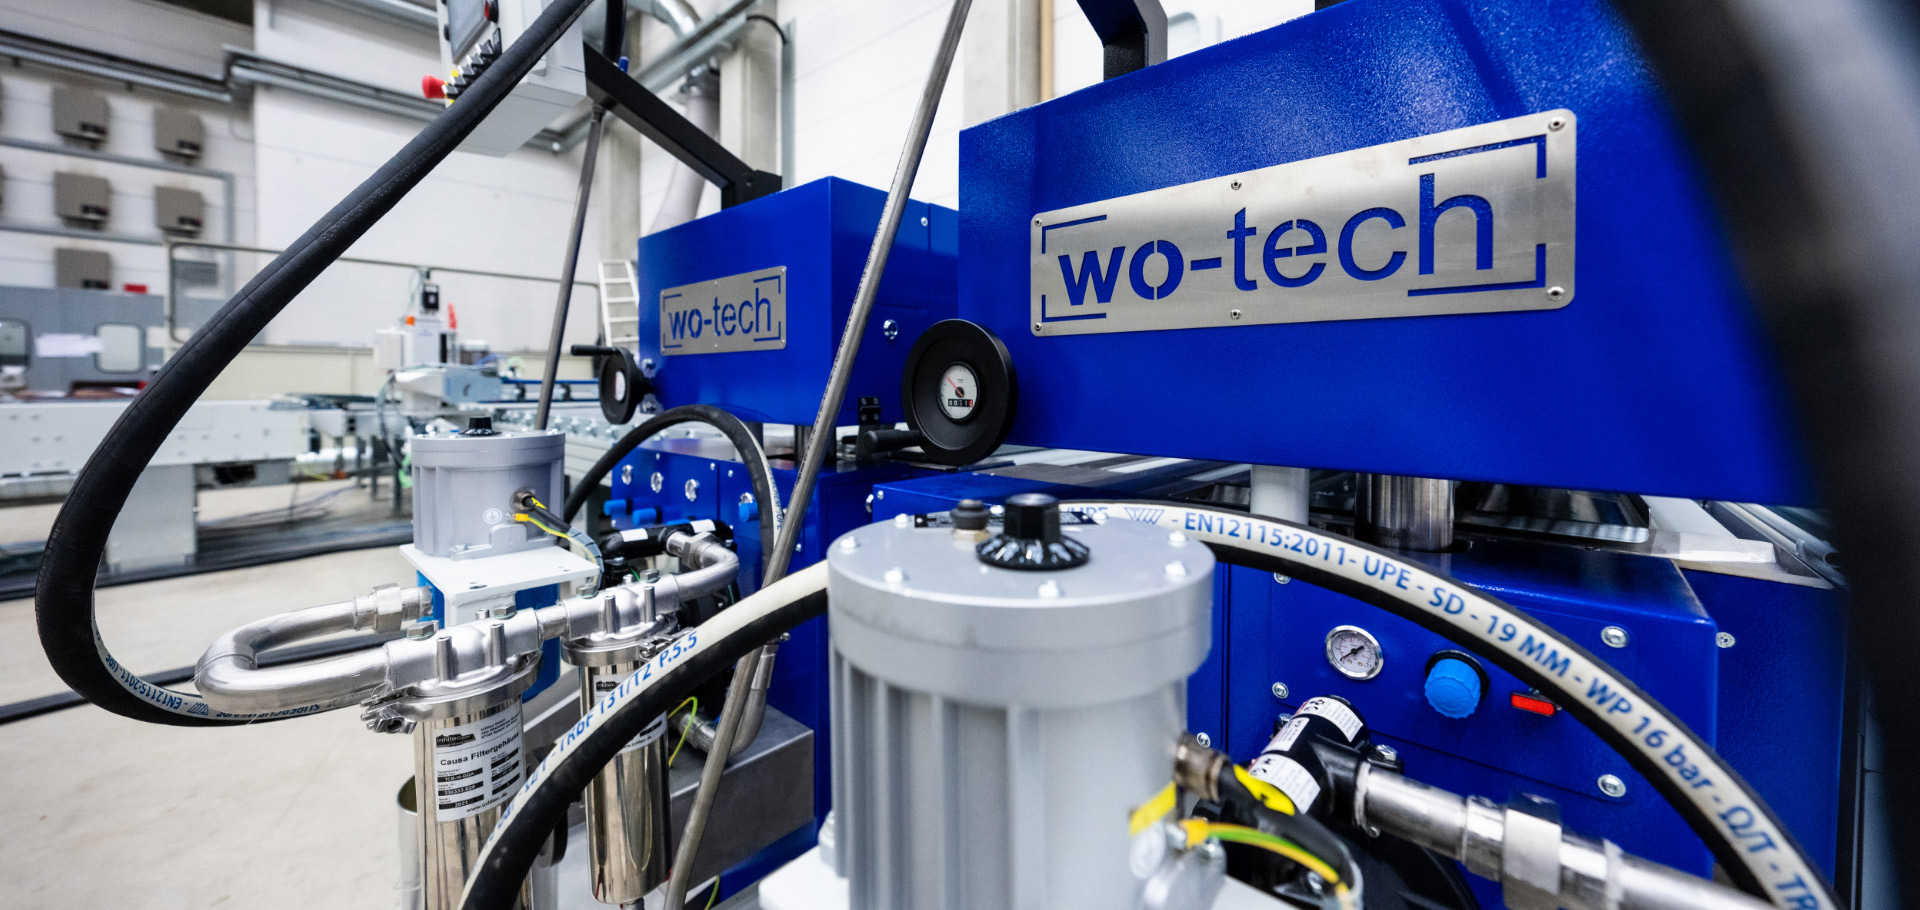 wotech-blue-machine-inscription-wotech